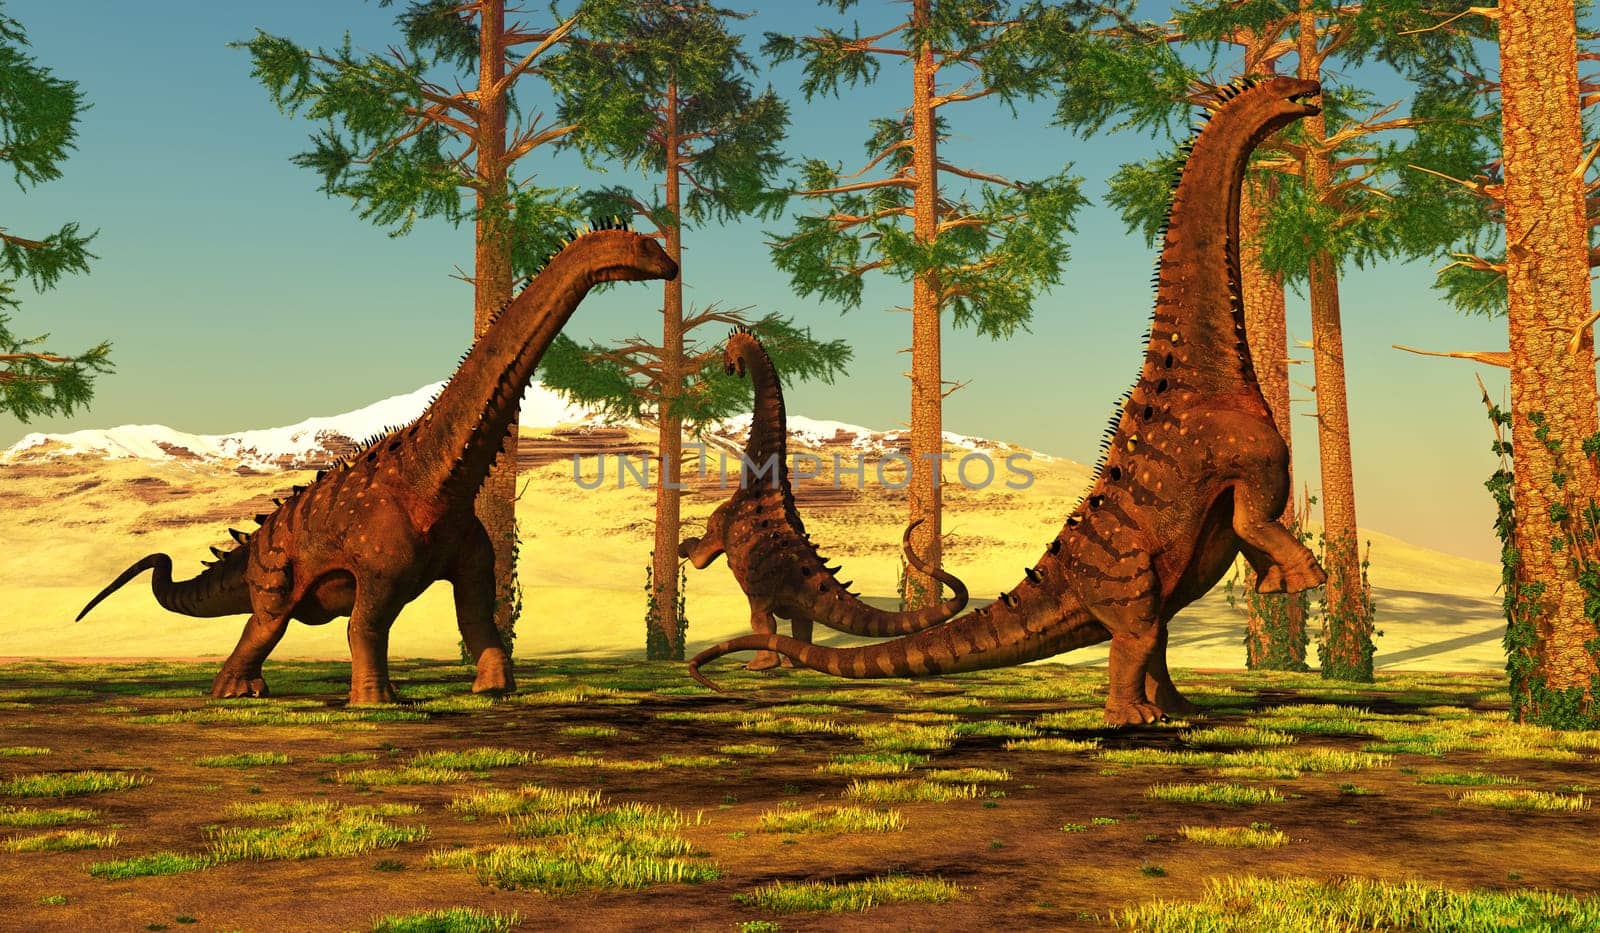 Alamosaurus eating Pine Trees by Catmando